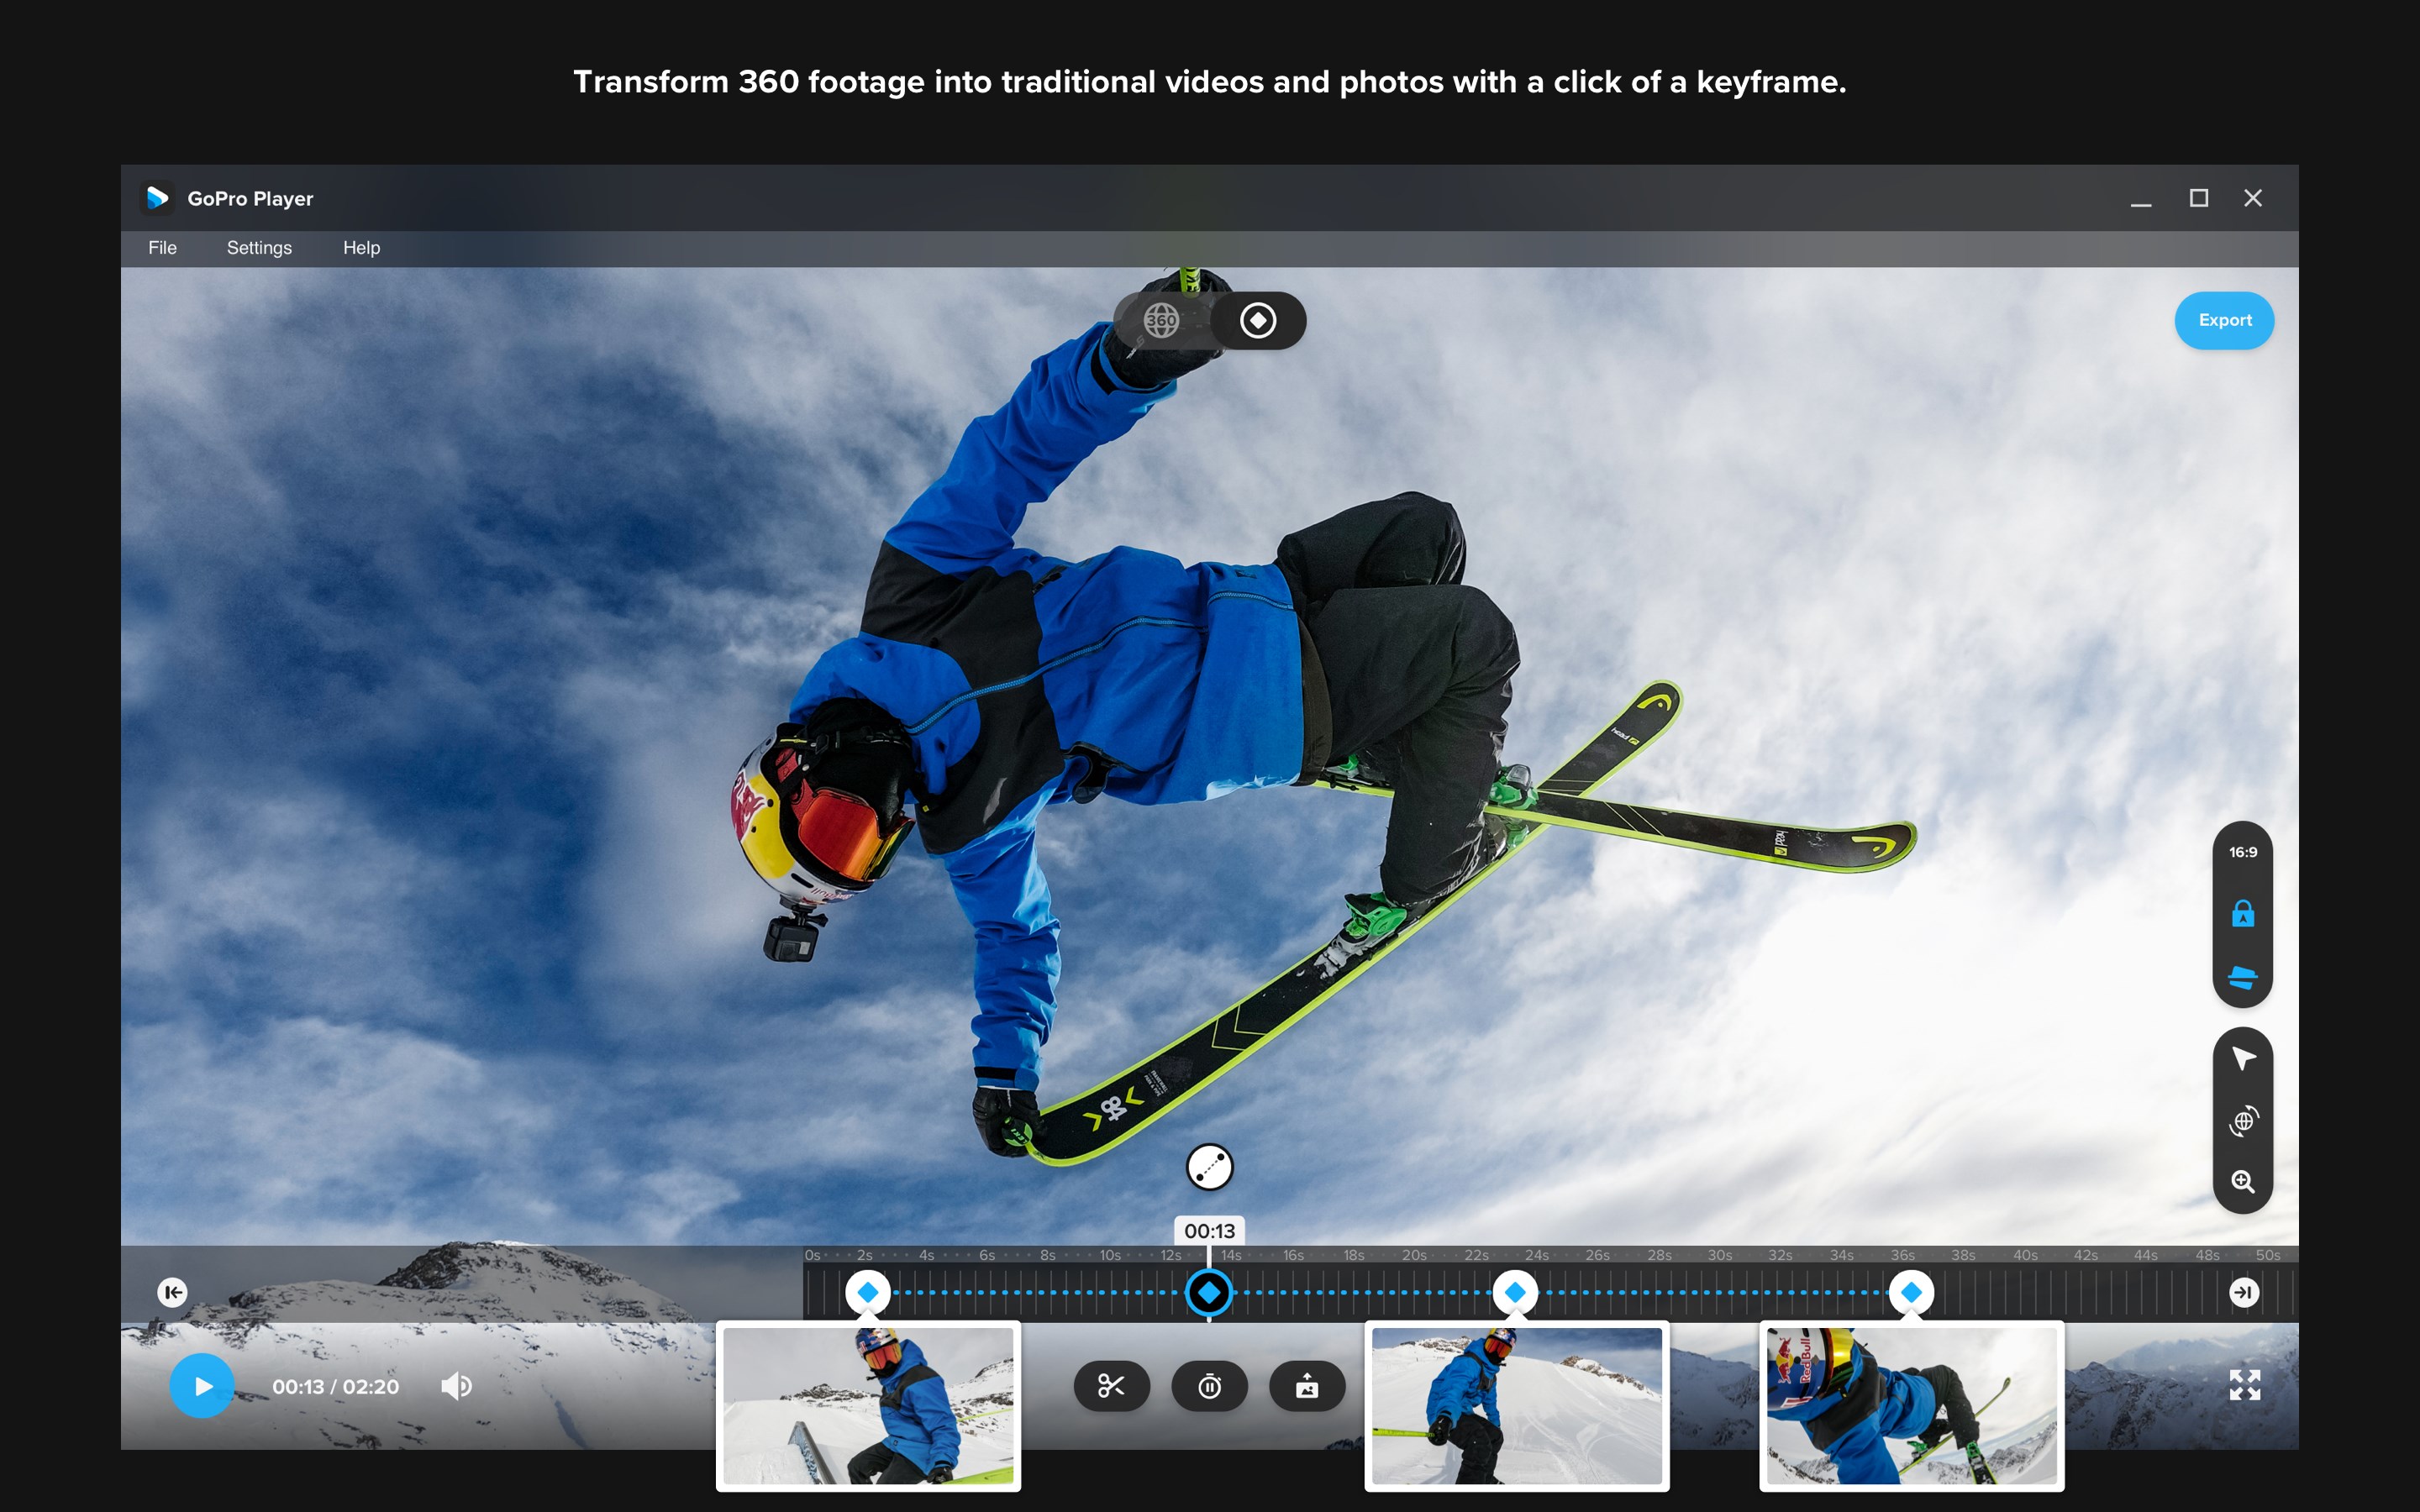 Get GoPro Player - Microsoft Store